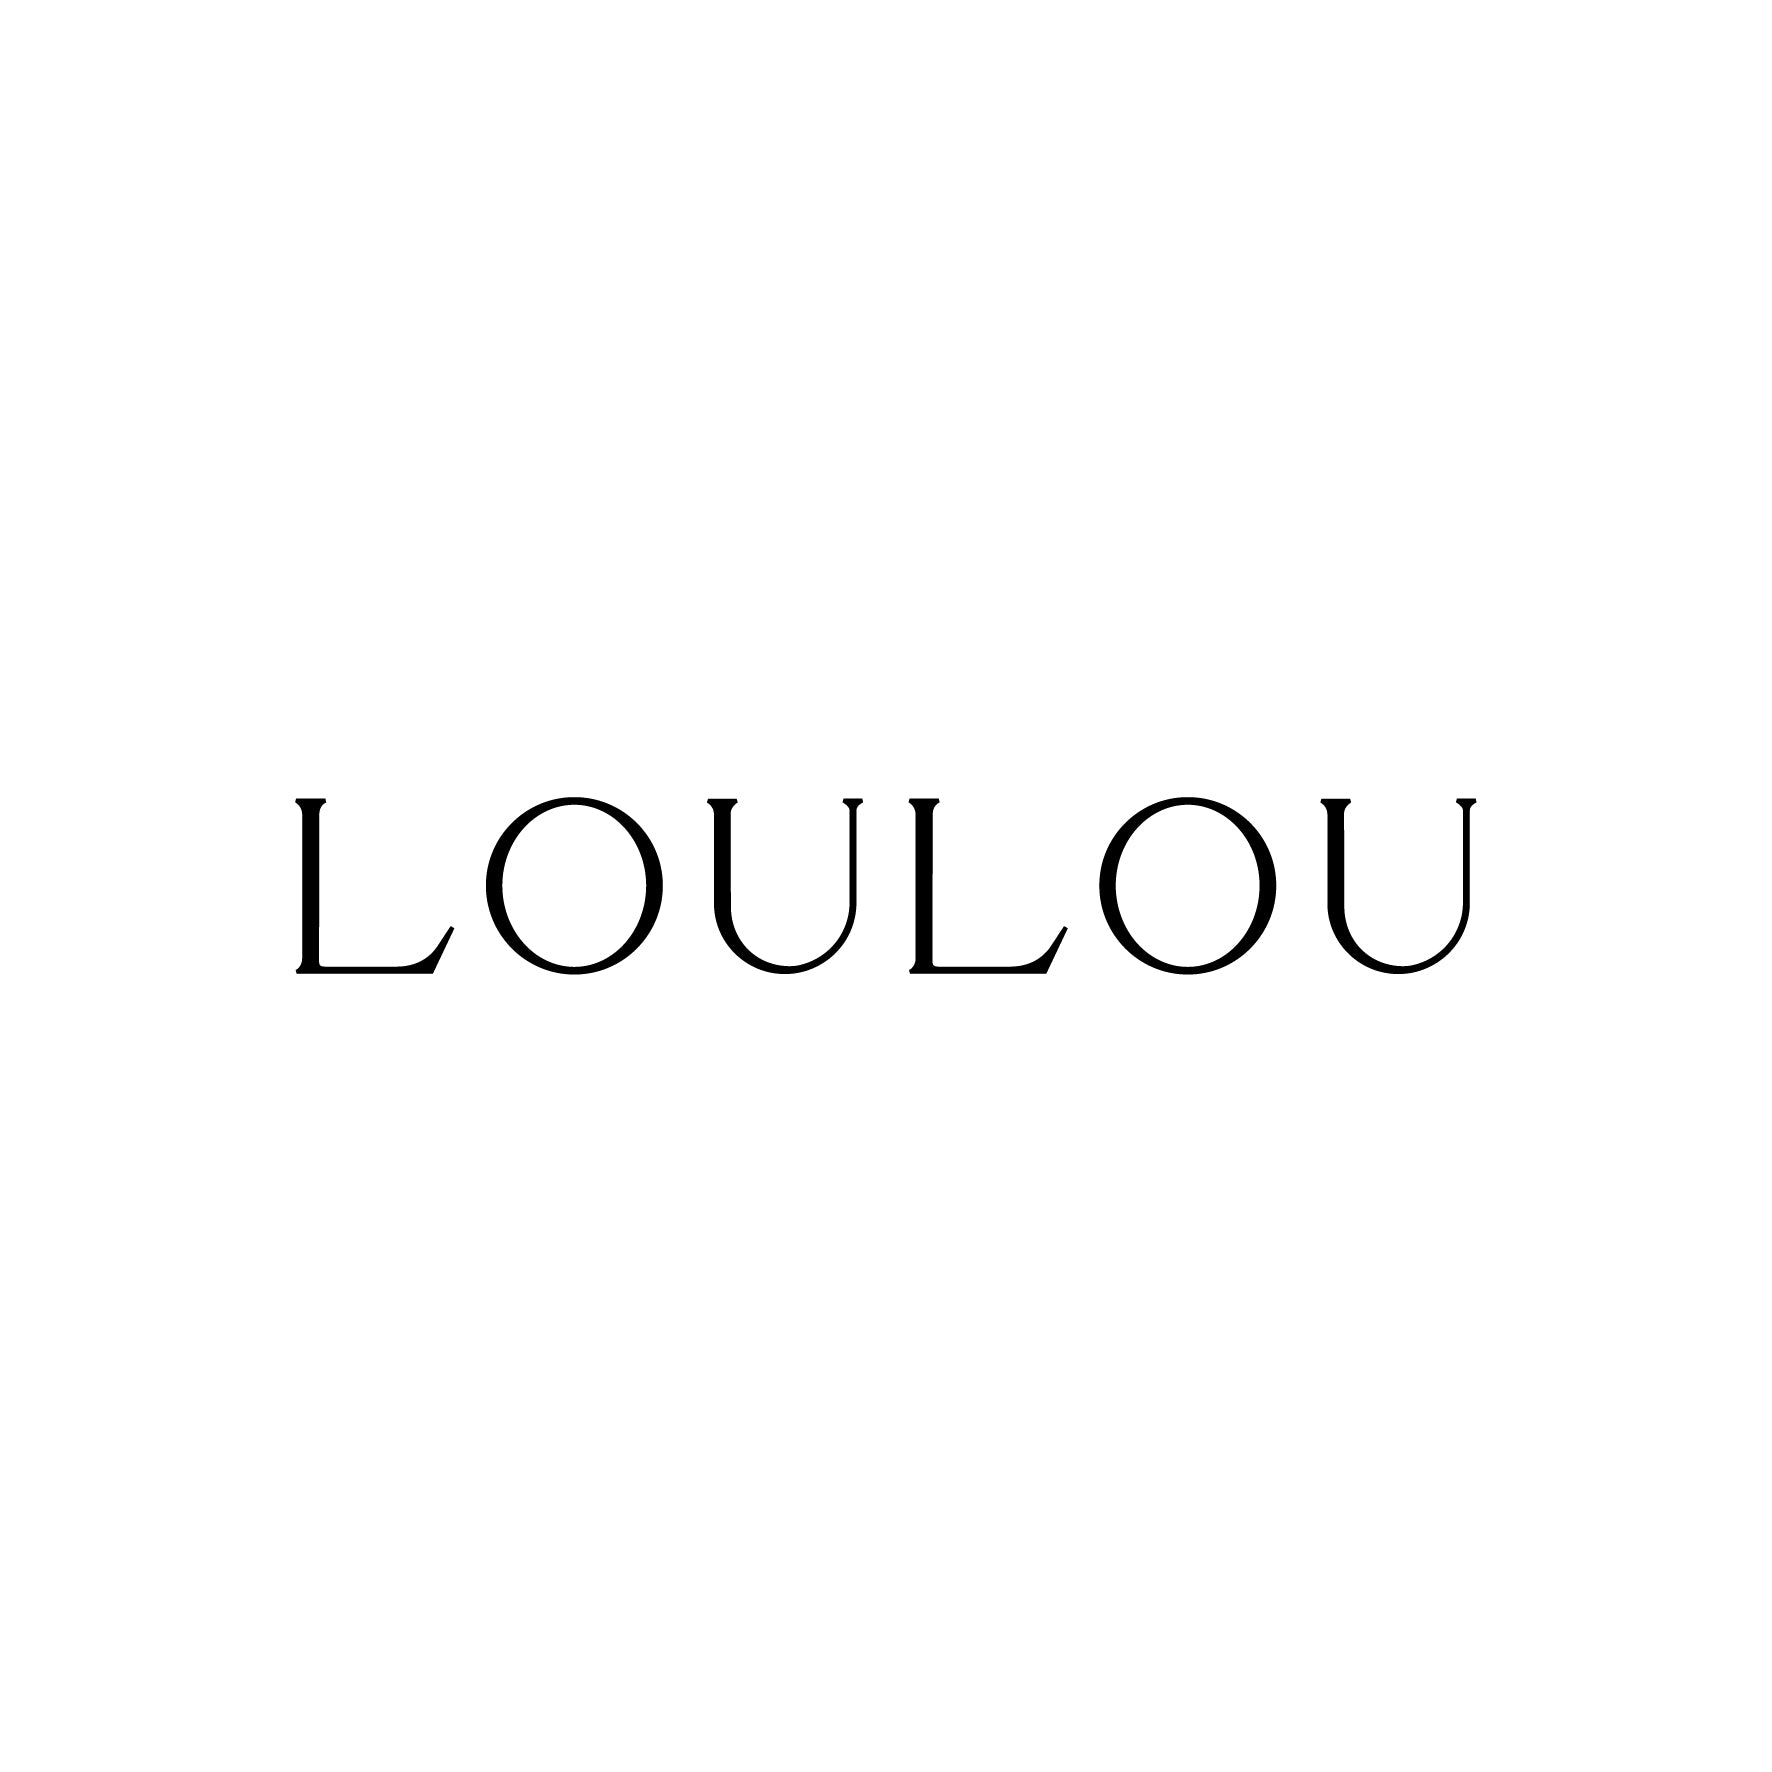 Home, Lou Lou Boutique